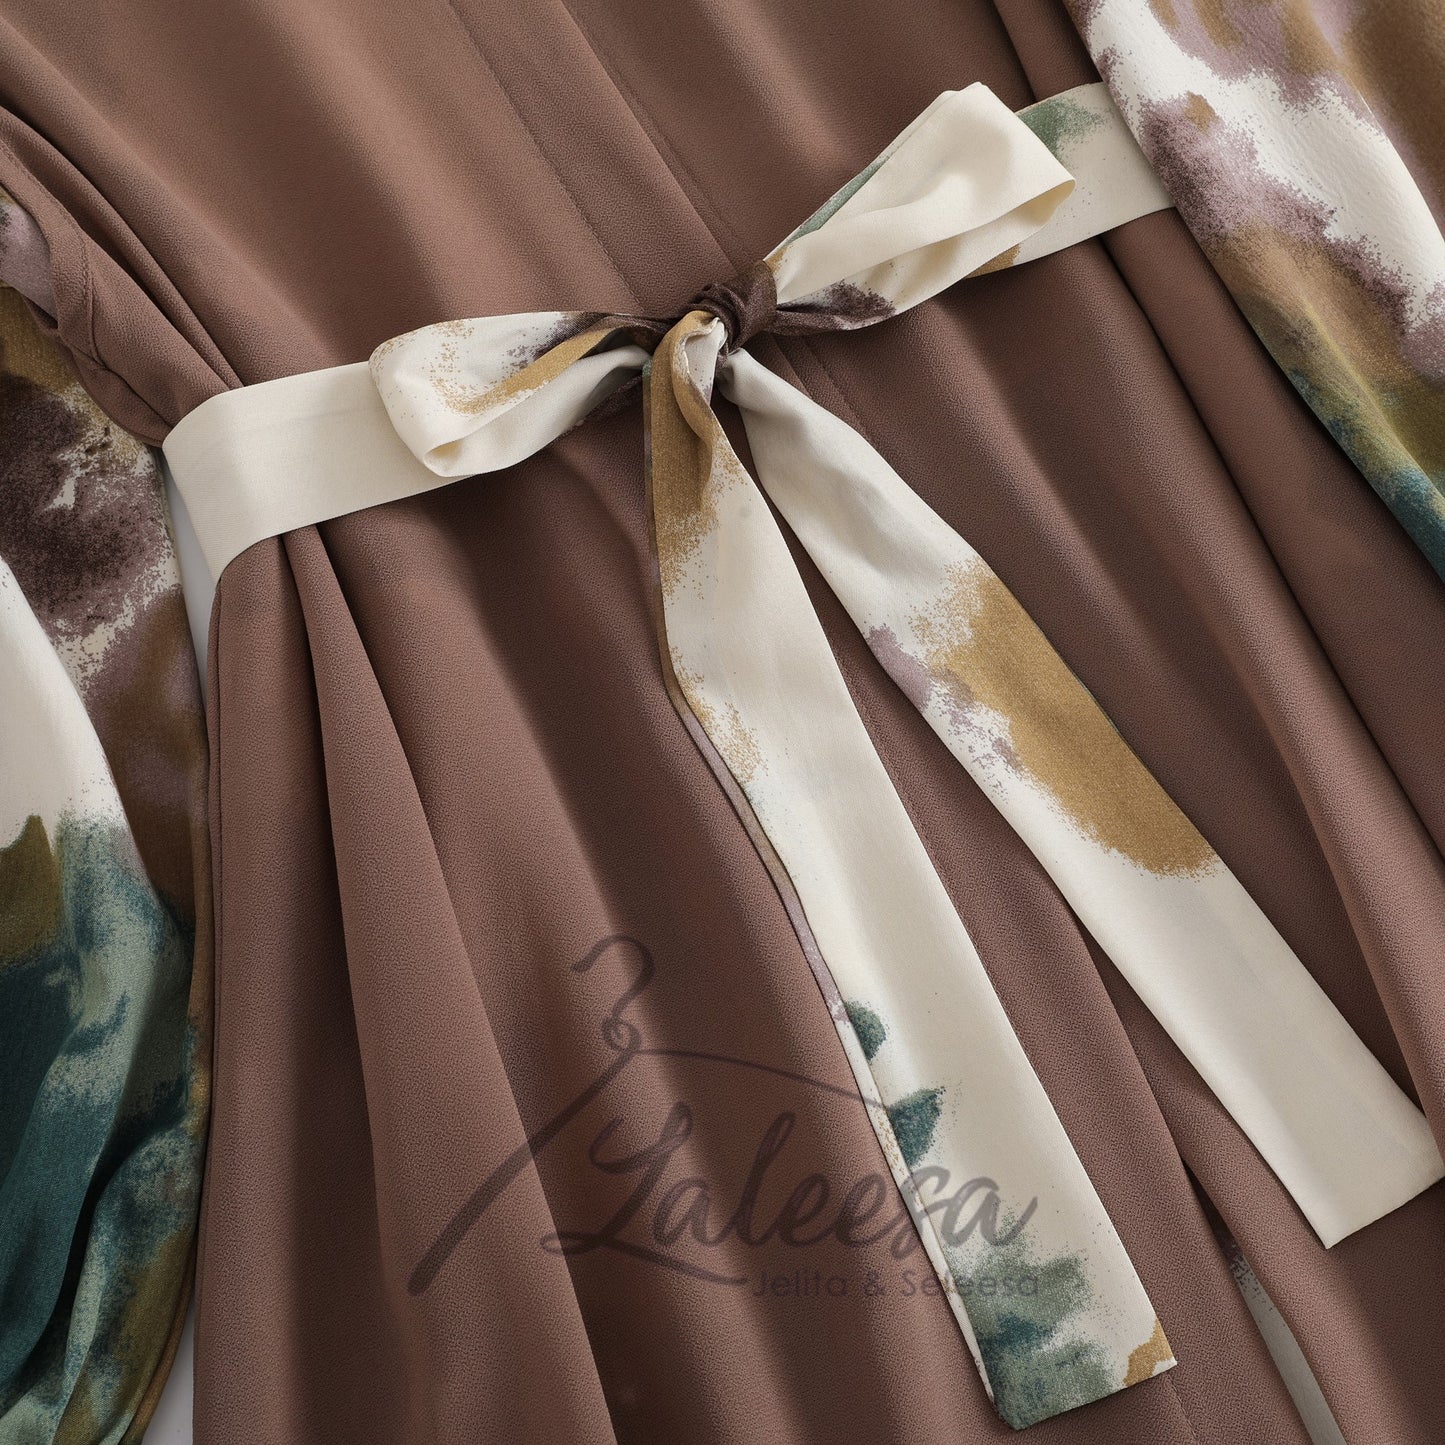 LALEESA (Dress + Cardigan) SW843894 SET ISLAH Waisted Floral Long Dress With Chiffon Suit Set Wear Dress Women